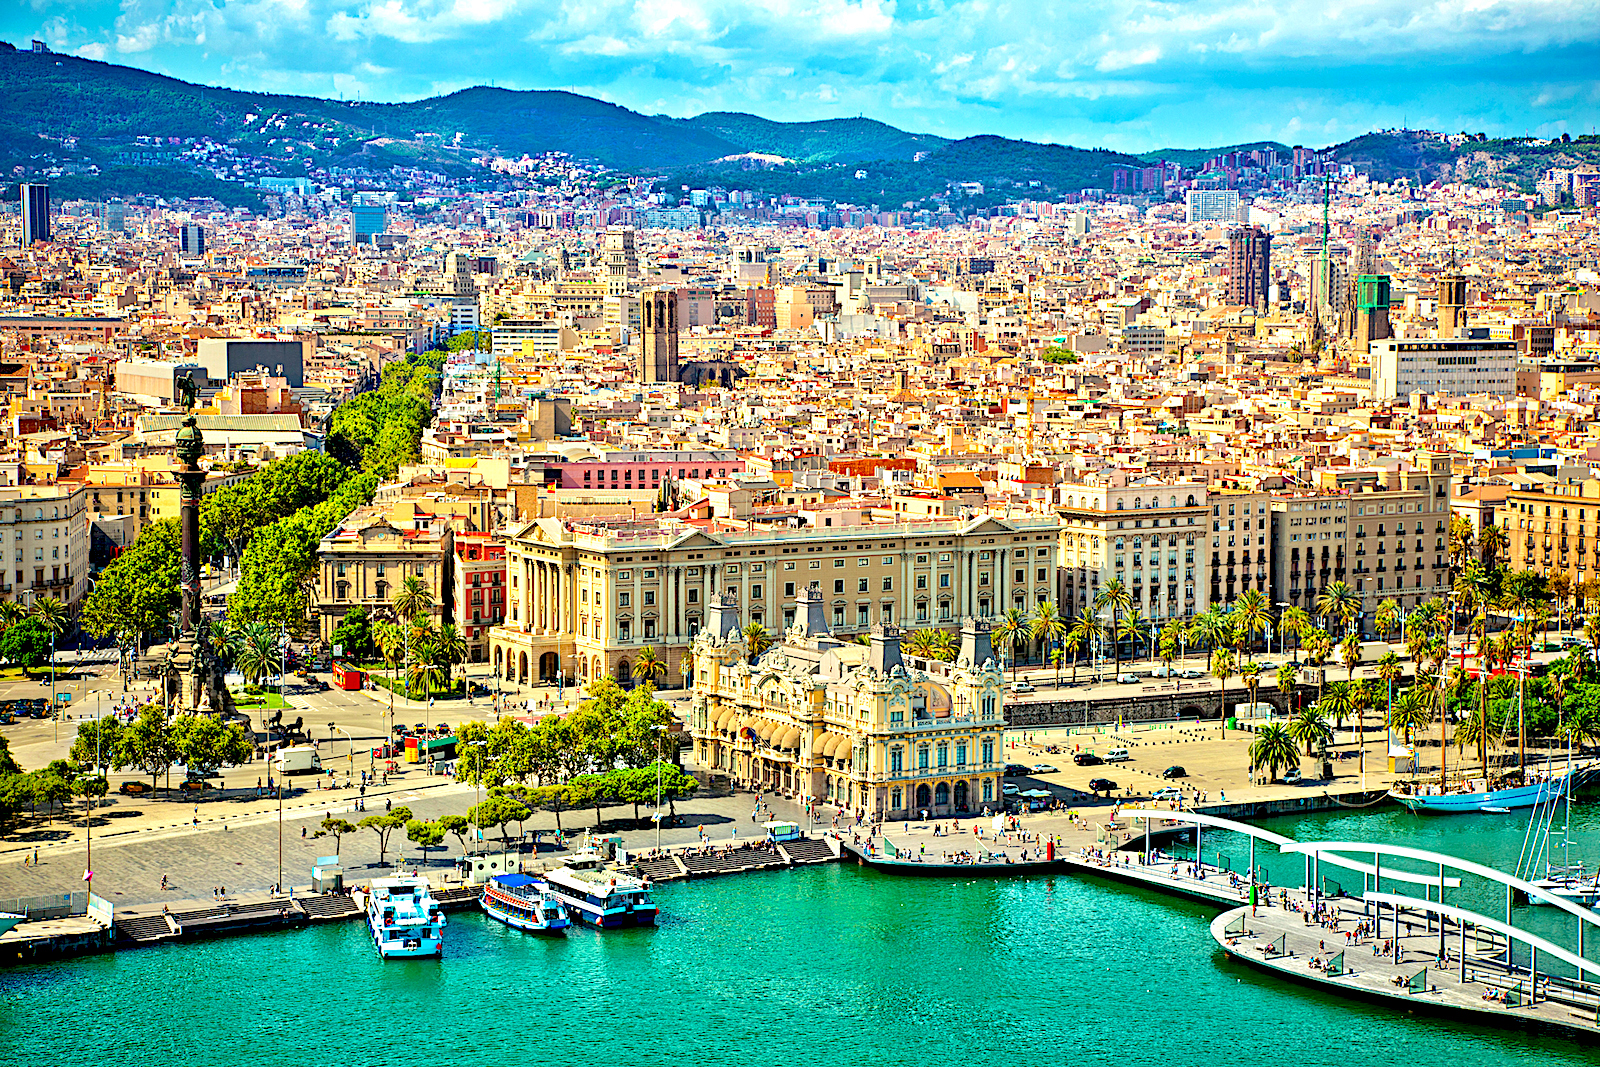 Barcelona enjoys a balmy climate on the Mediterranean